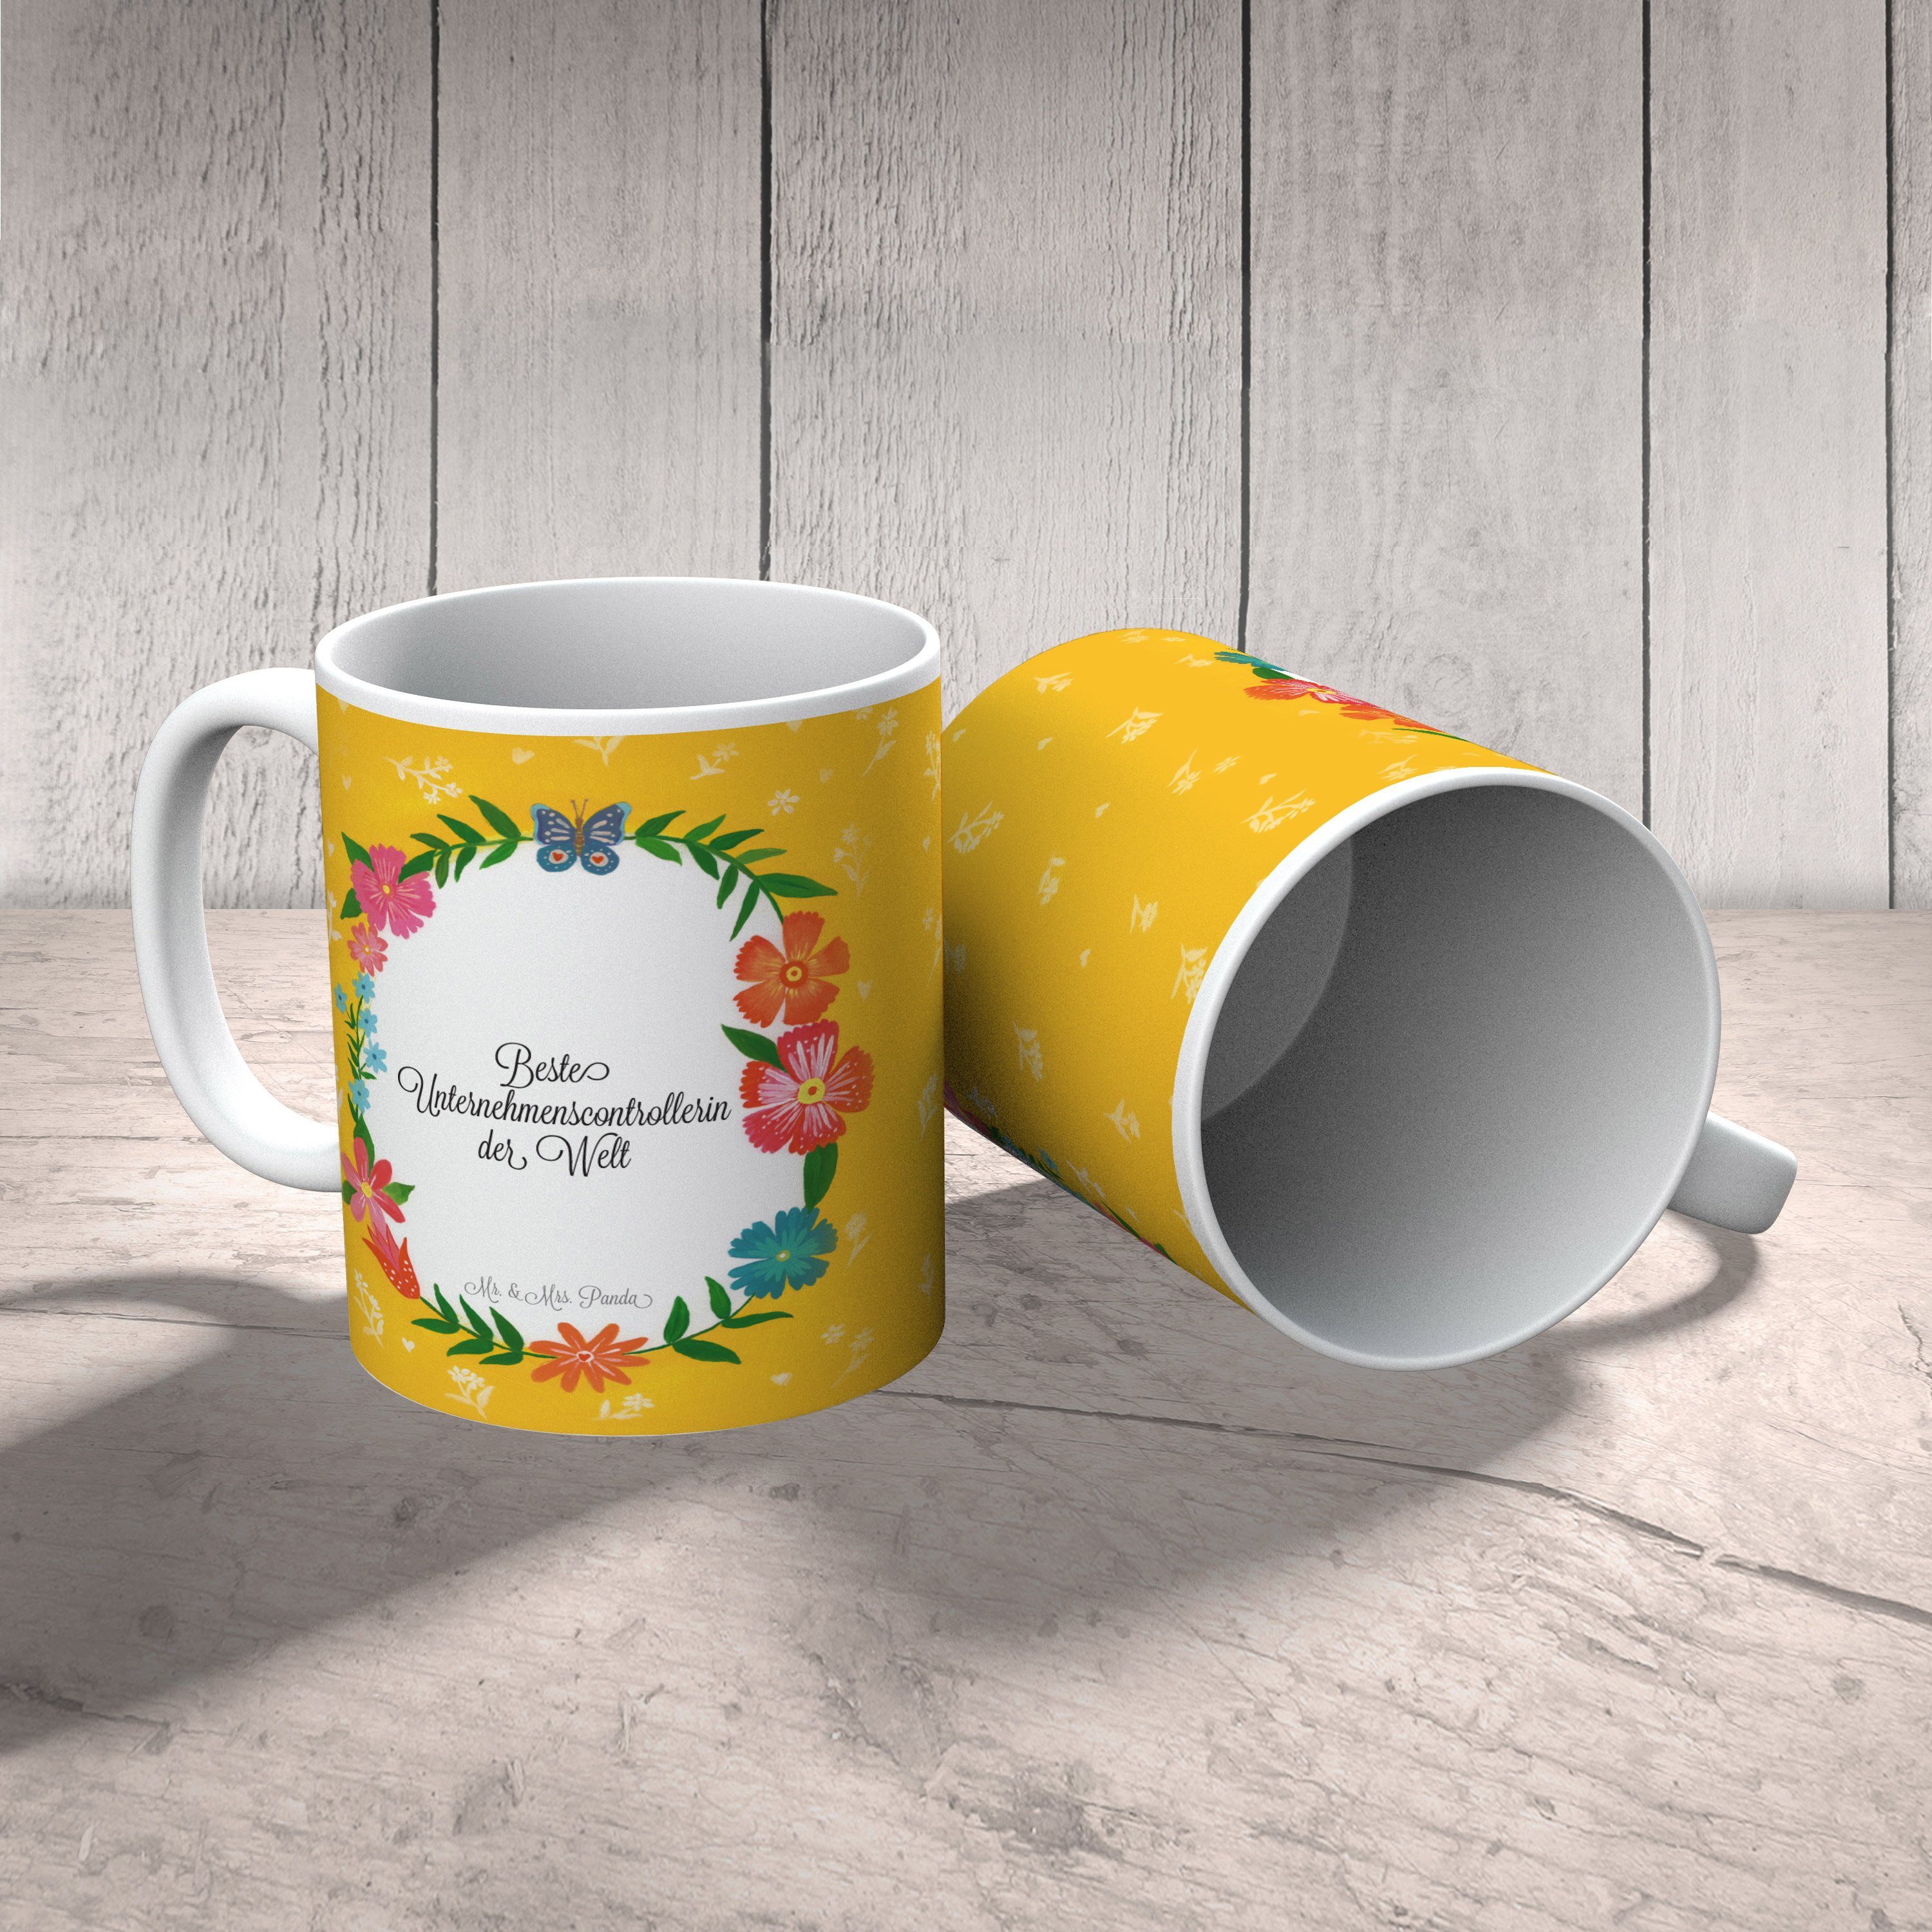 Mr. & Mrs. Panda Tasse Teetasse, Keramik Unternehmenscontrollerin - Kaffeebec, Gratulation, Geschenk